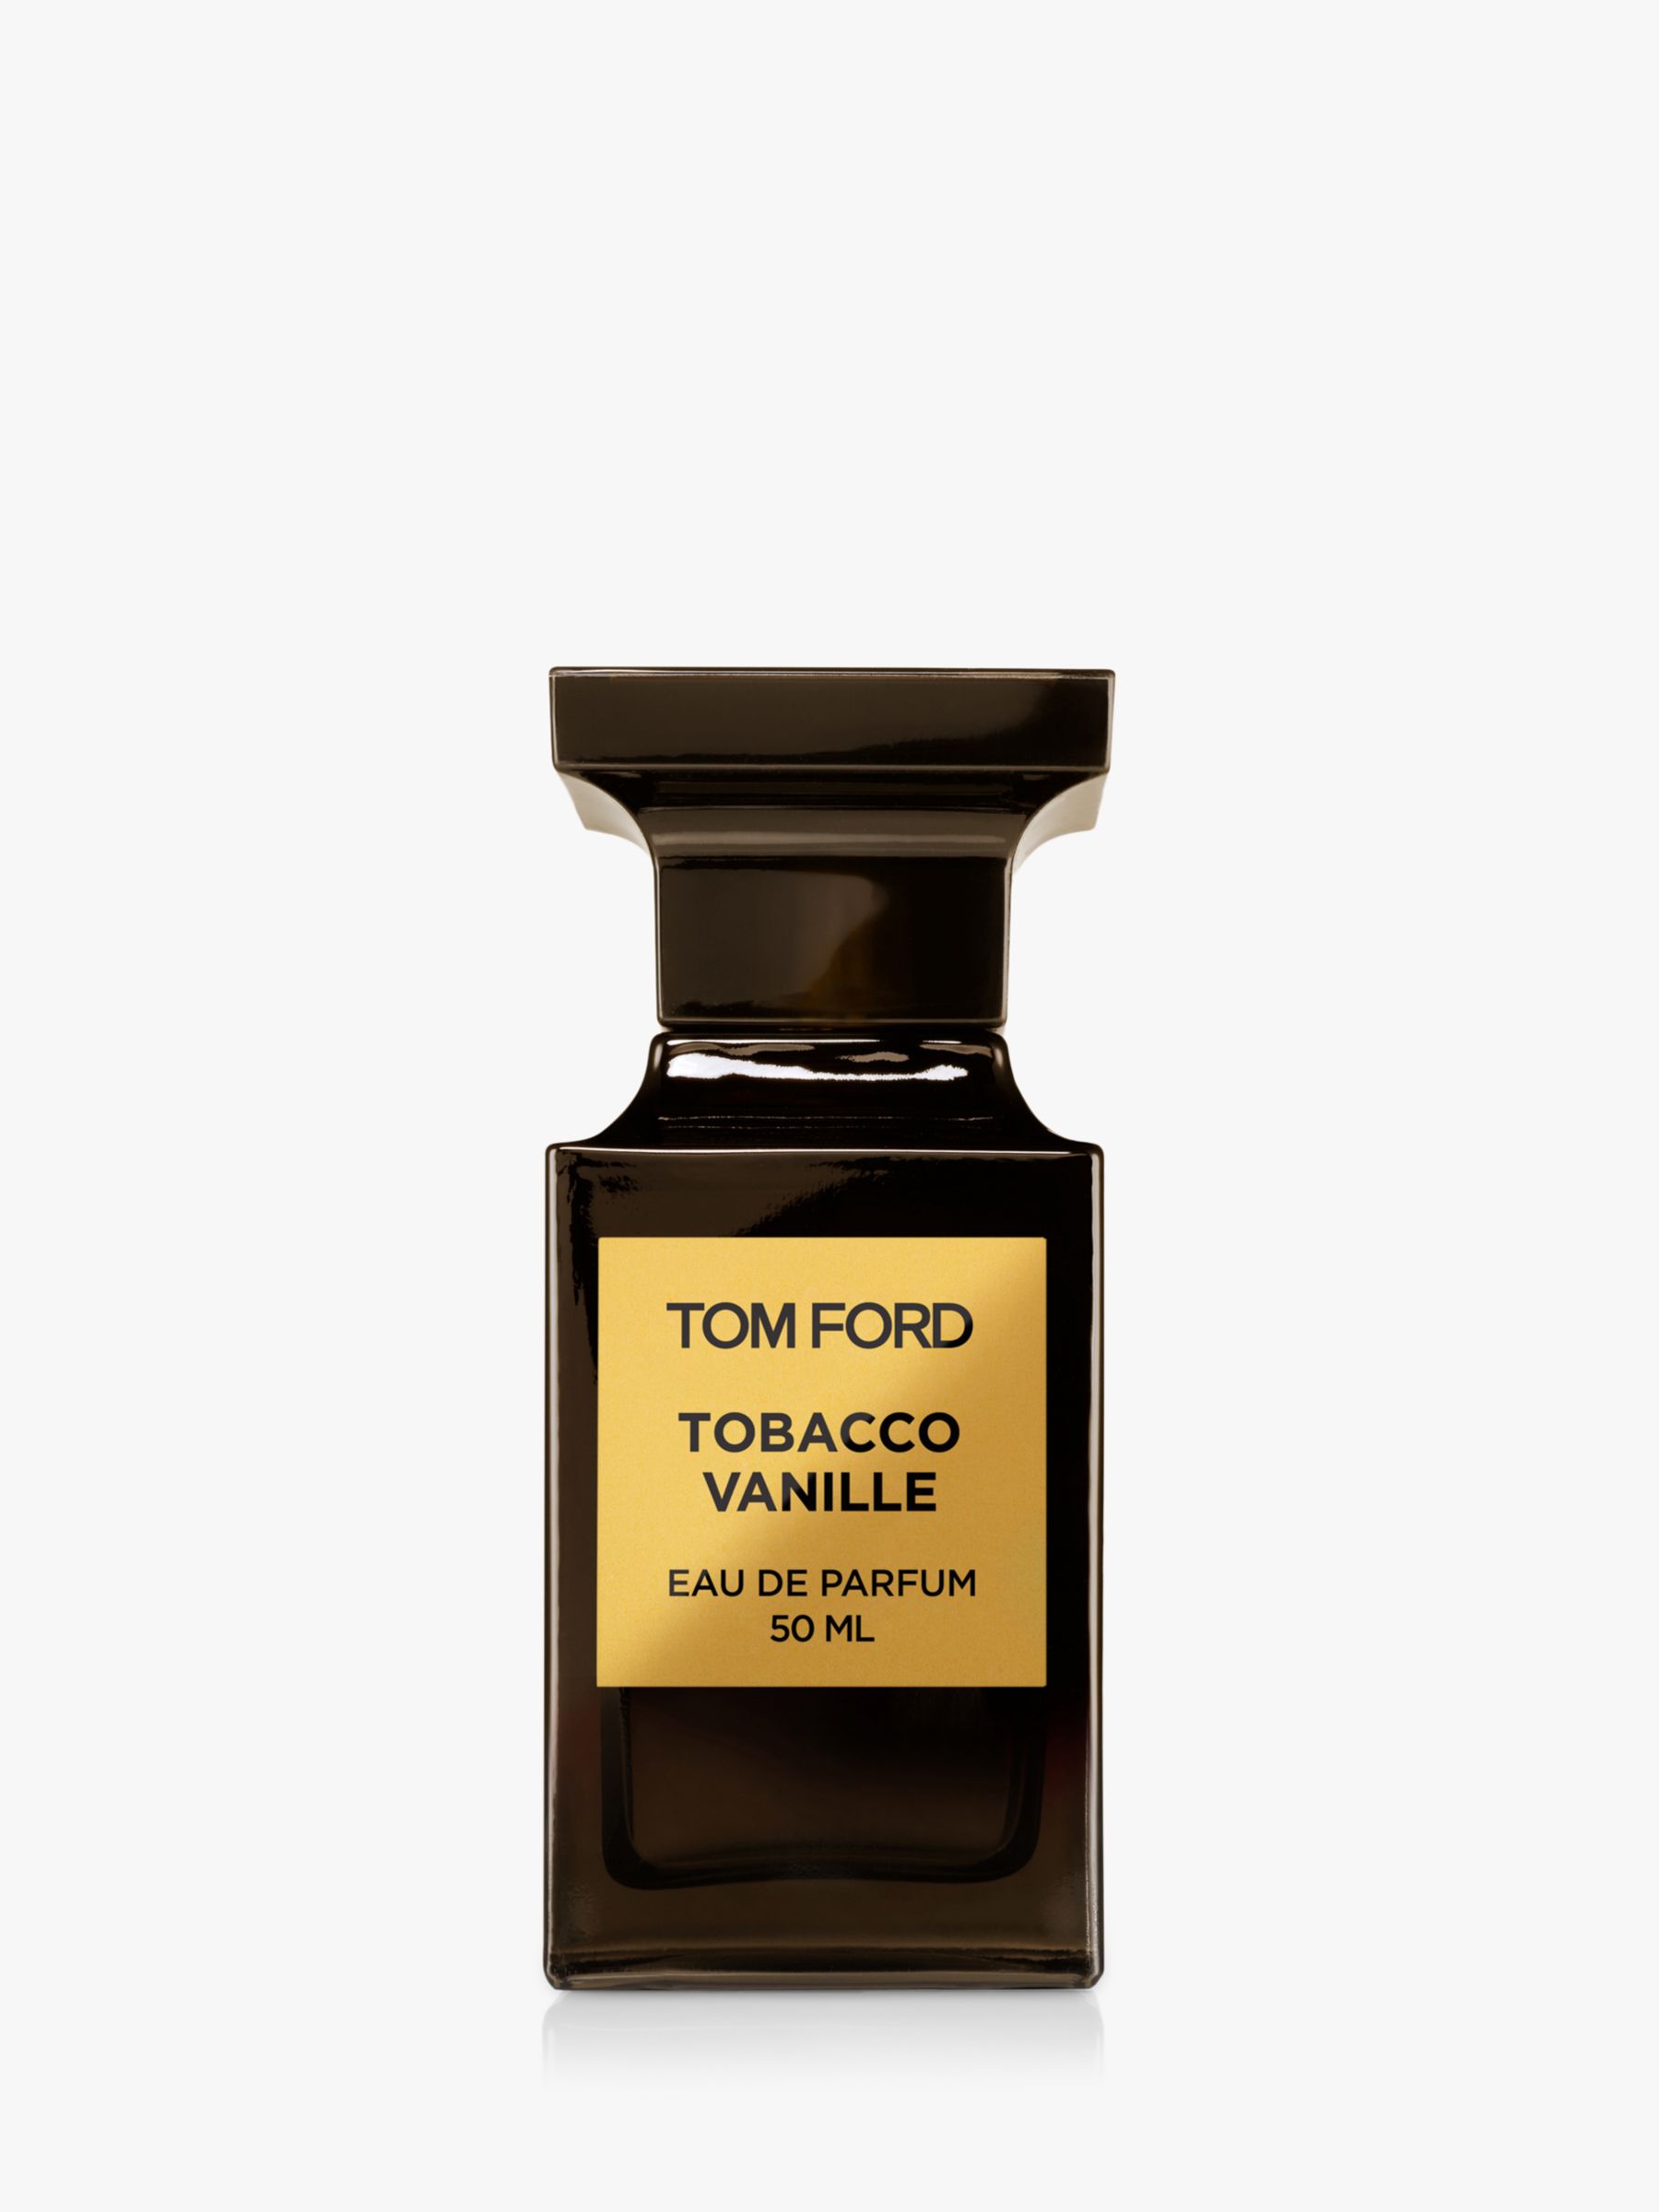 TOM FORD Private Blend Tobacco Vanille Eau de Parfum, 50ml at John Lewis   Partners